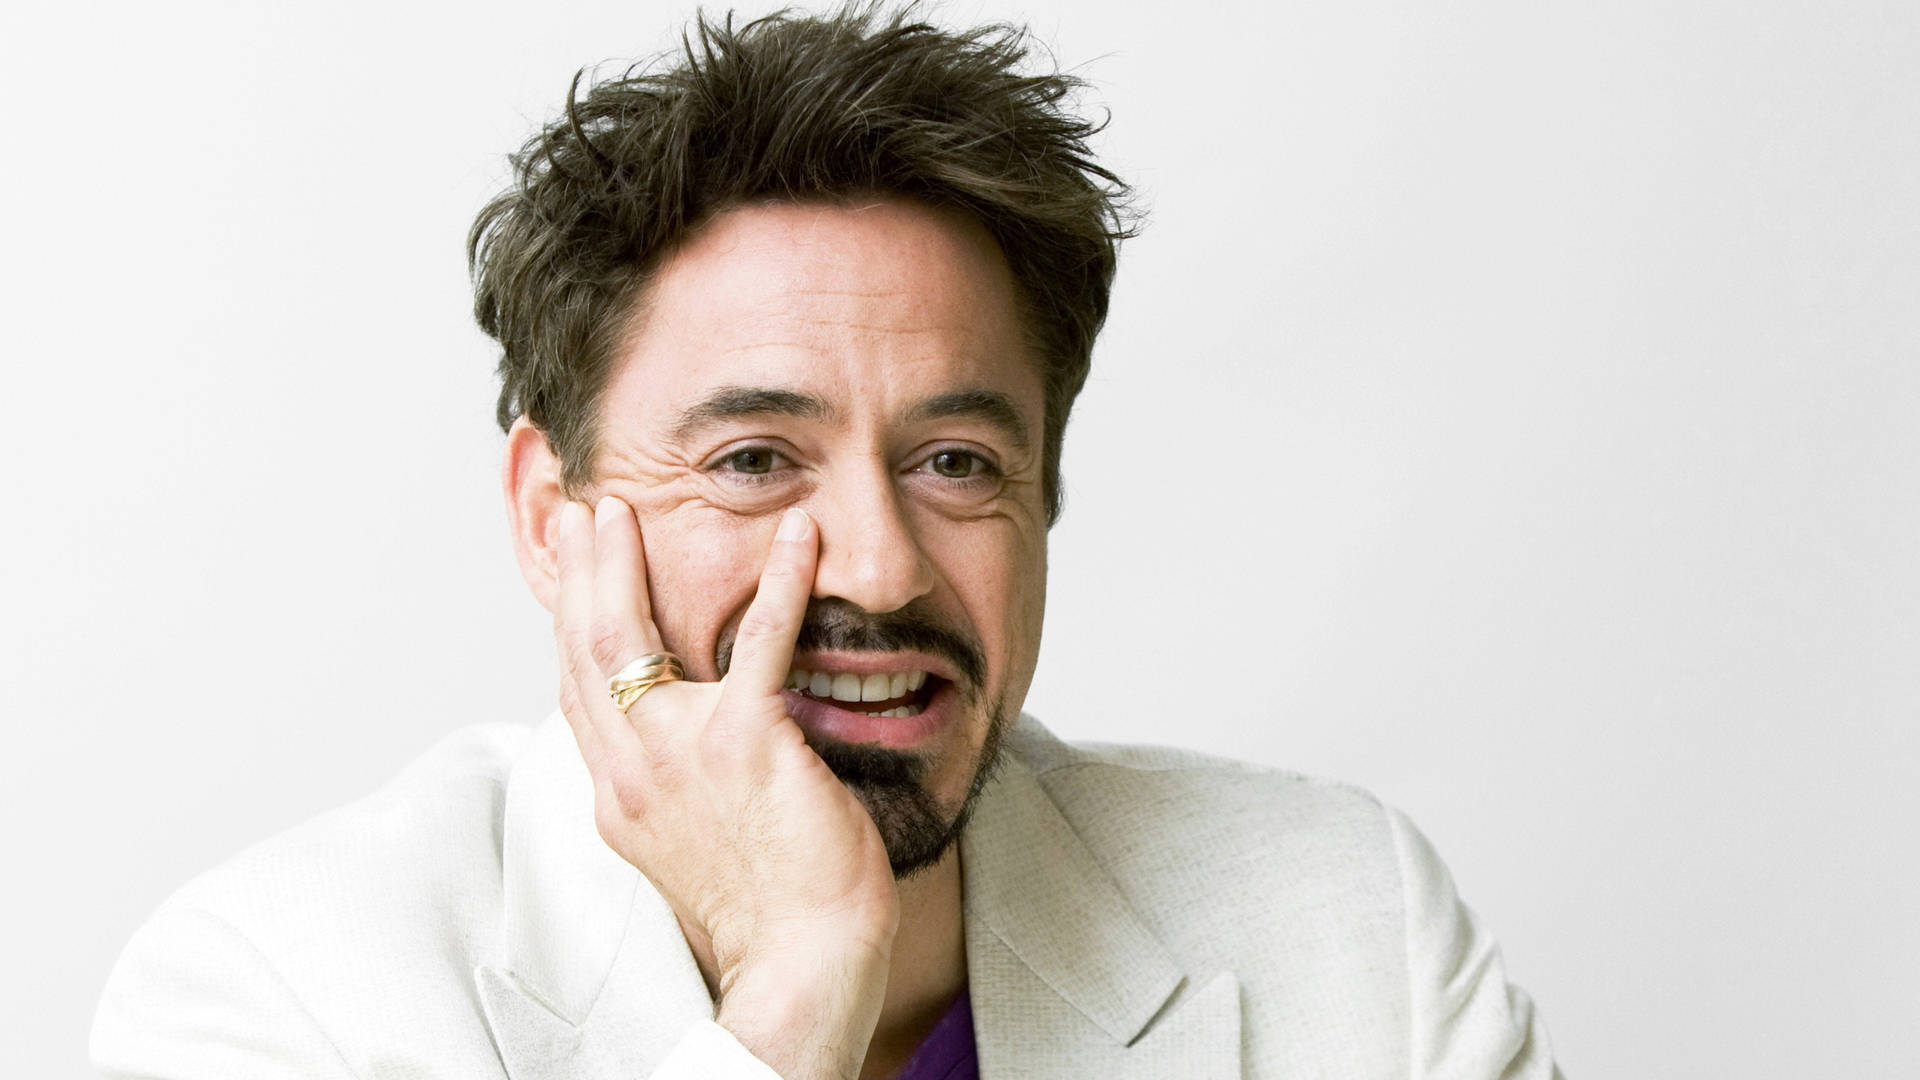 Robert Downey Jr Celebrity Portrait Background